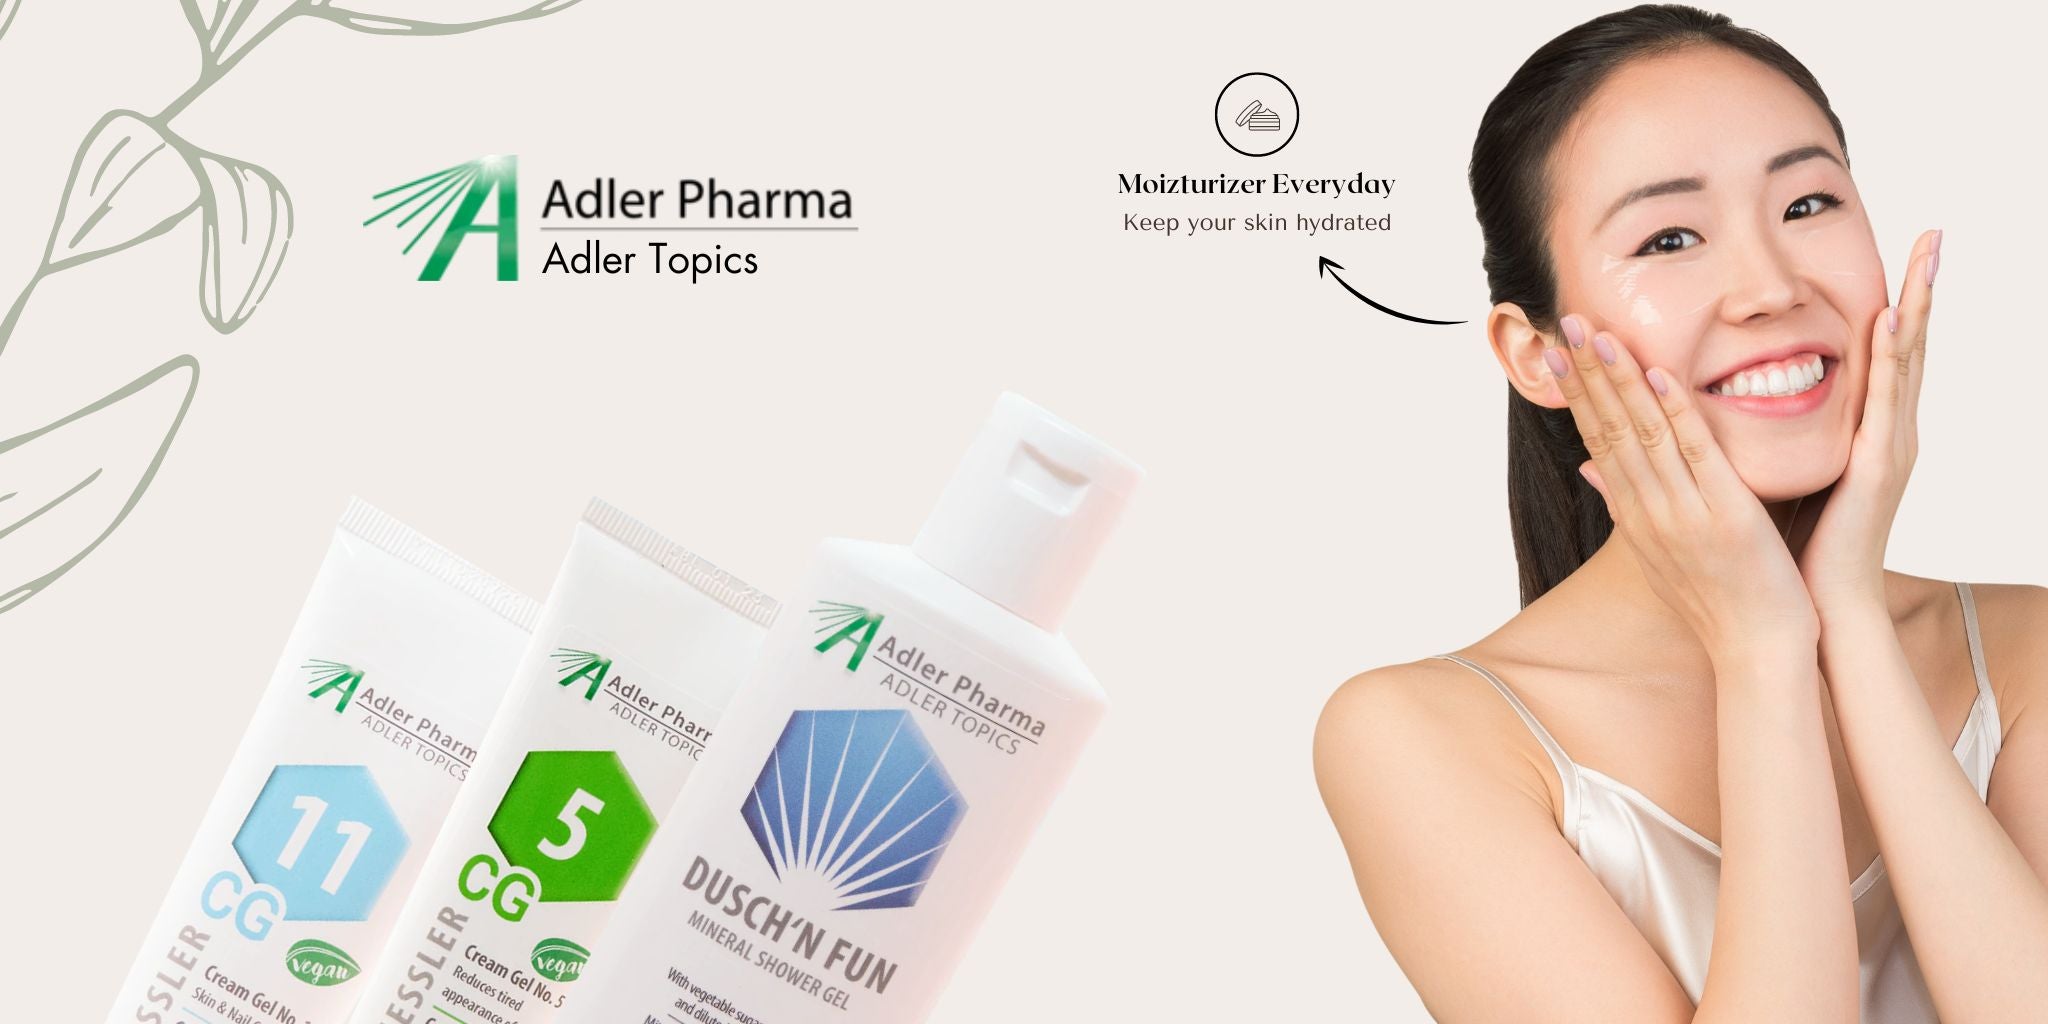 Alder Pharma - Alder Topics Products